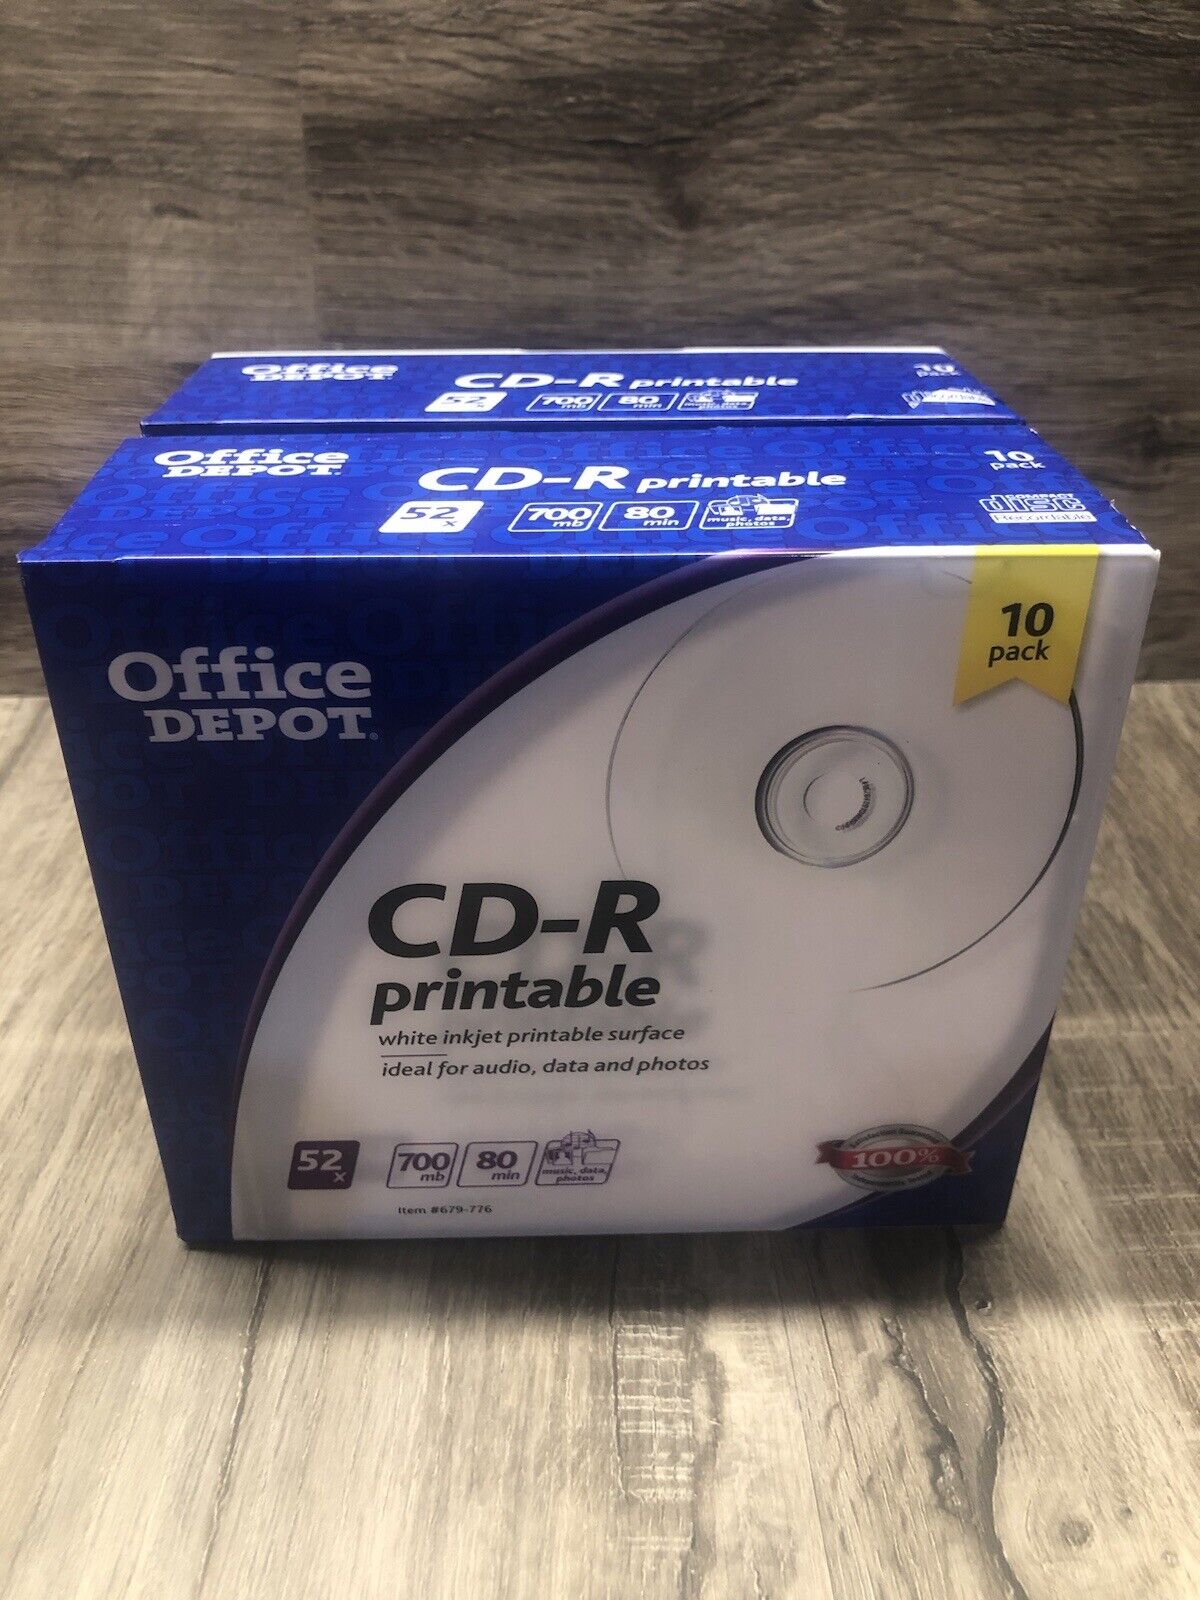 Office Depot 2X 10 Pack CD-R Printable, 700 mb, 80 min, 52x. Music Data Photos